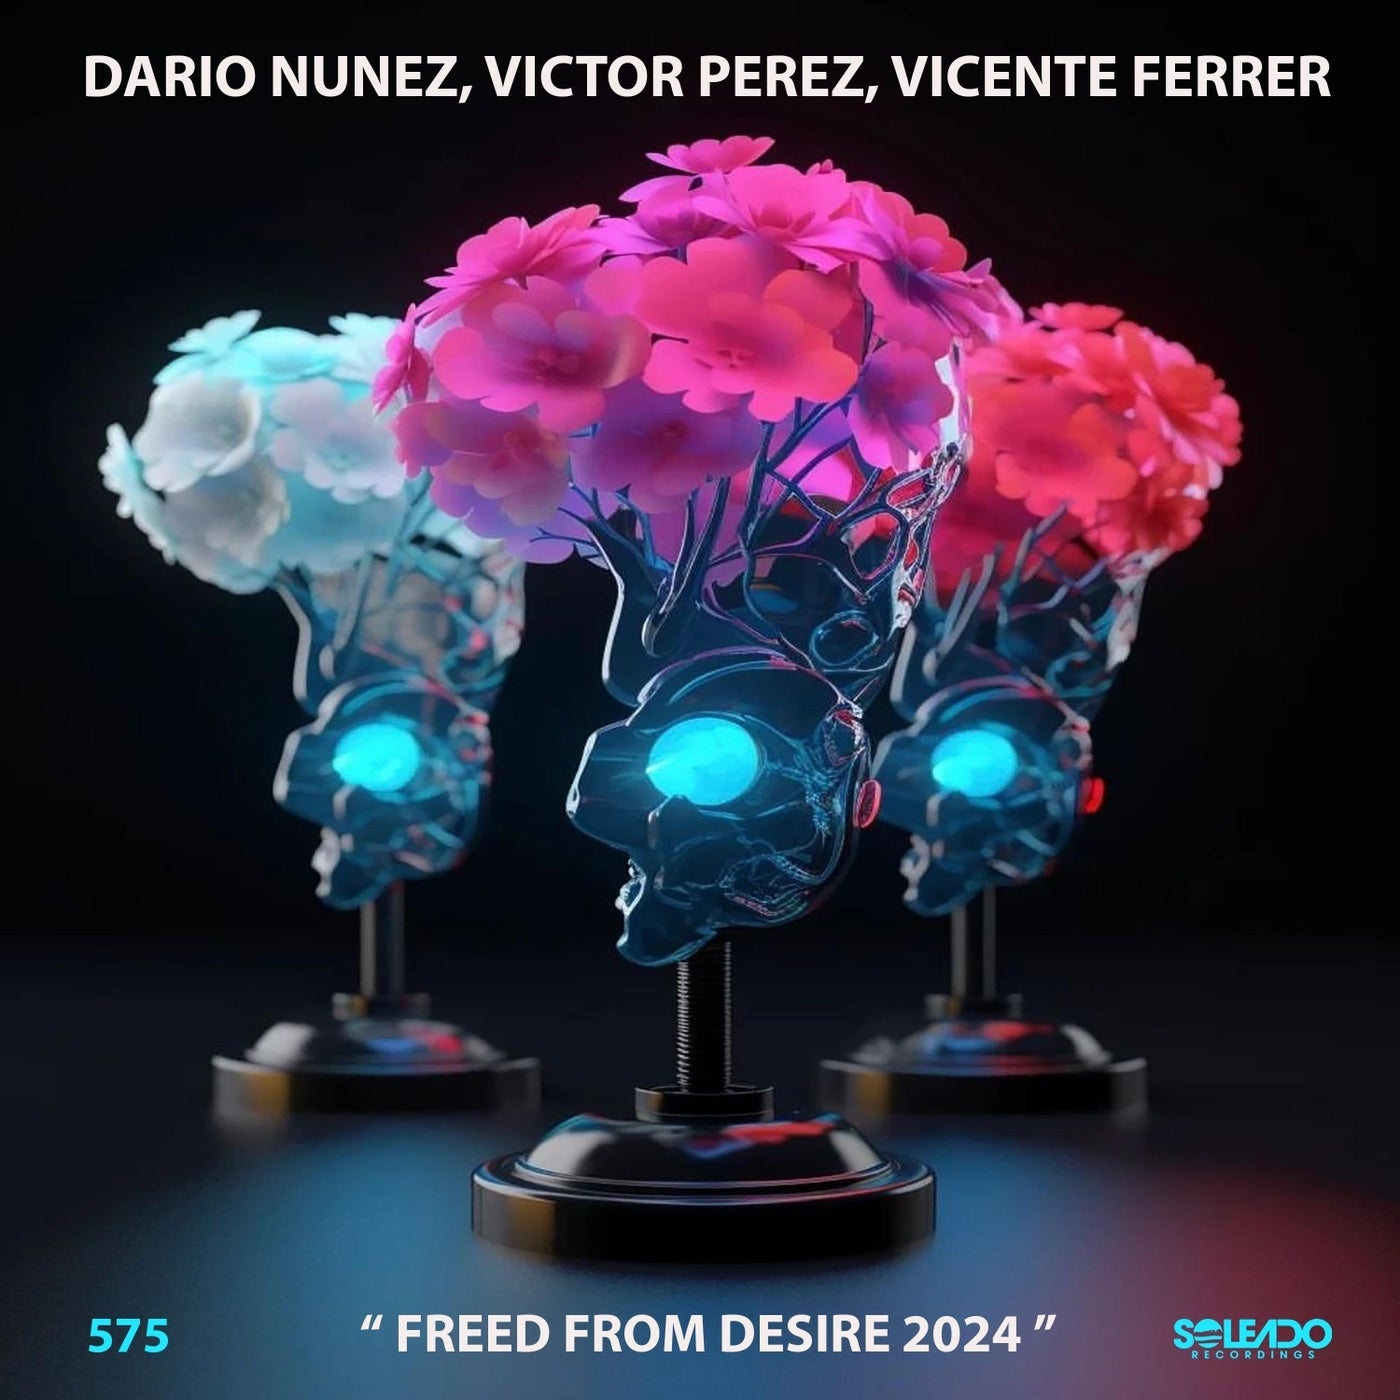 image cover: Dario Nunez, Victor Perez, Vicente Ferrer - Freed from desire 2024 (original) on Soleado Recordings